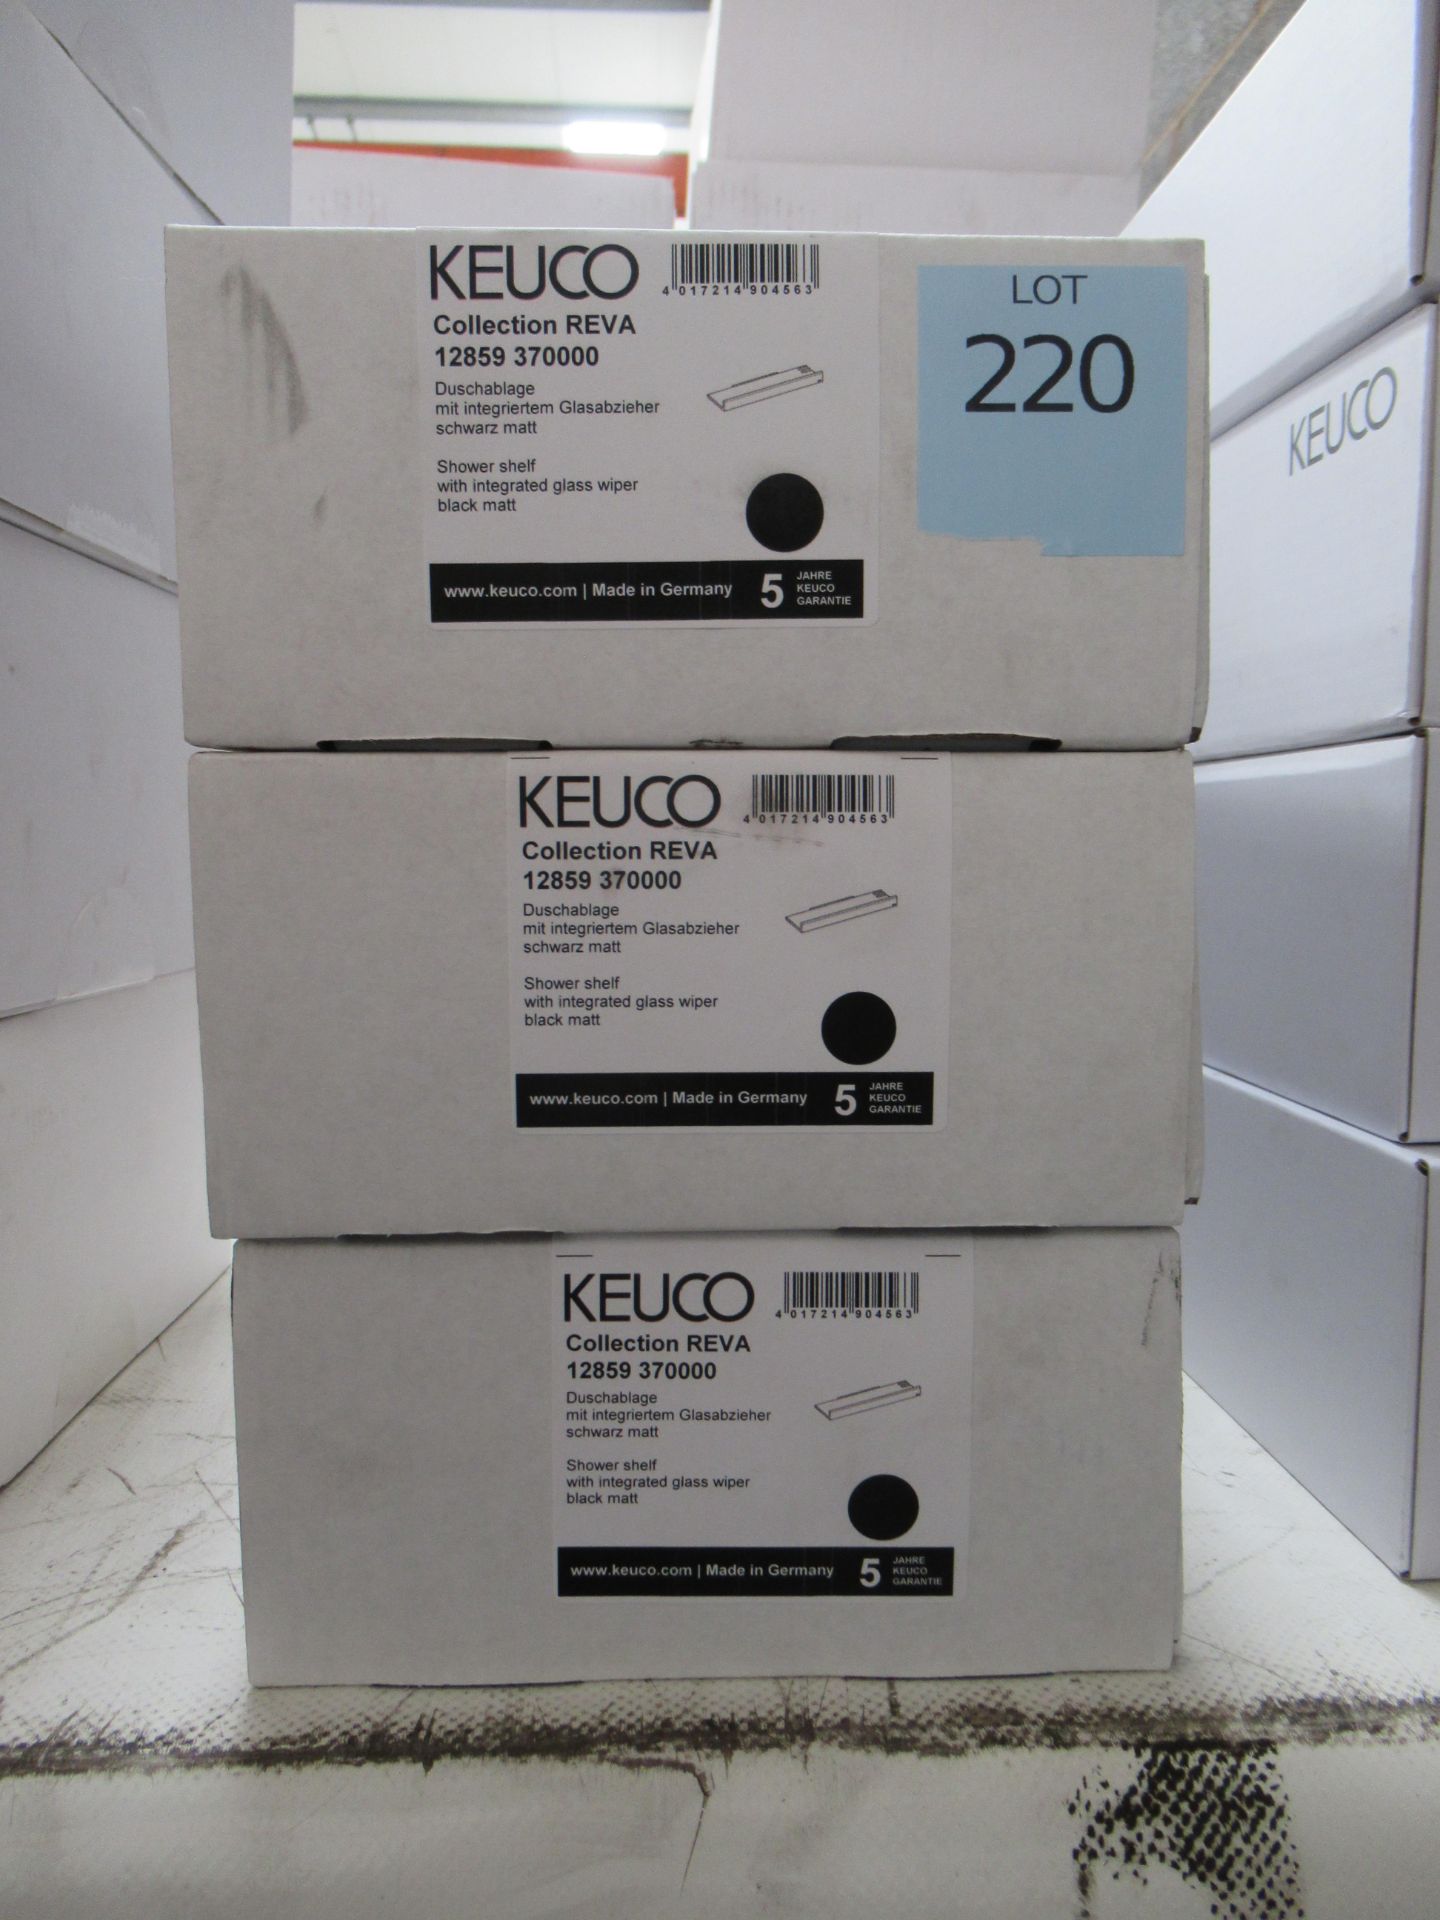 3 x Keuco Collection Reva Shower Shelf, Black Matt, P/N 12859-370000 - Image 2 of 2